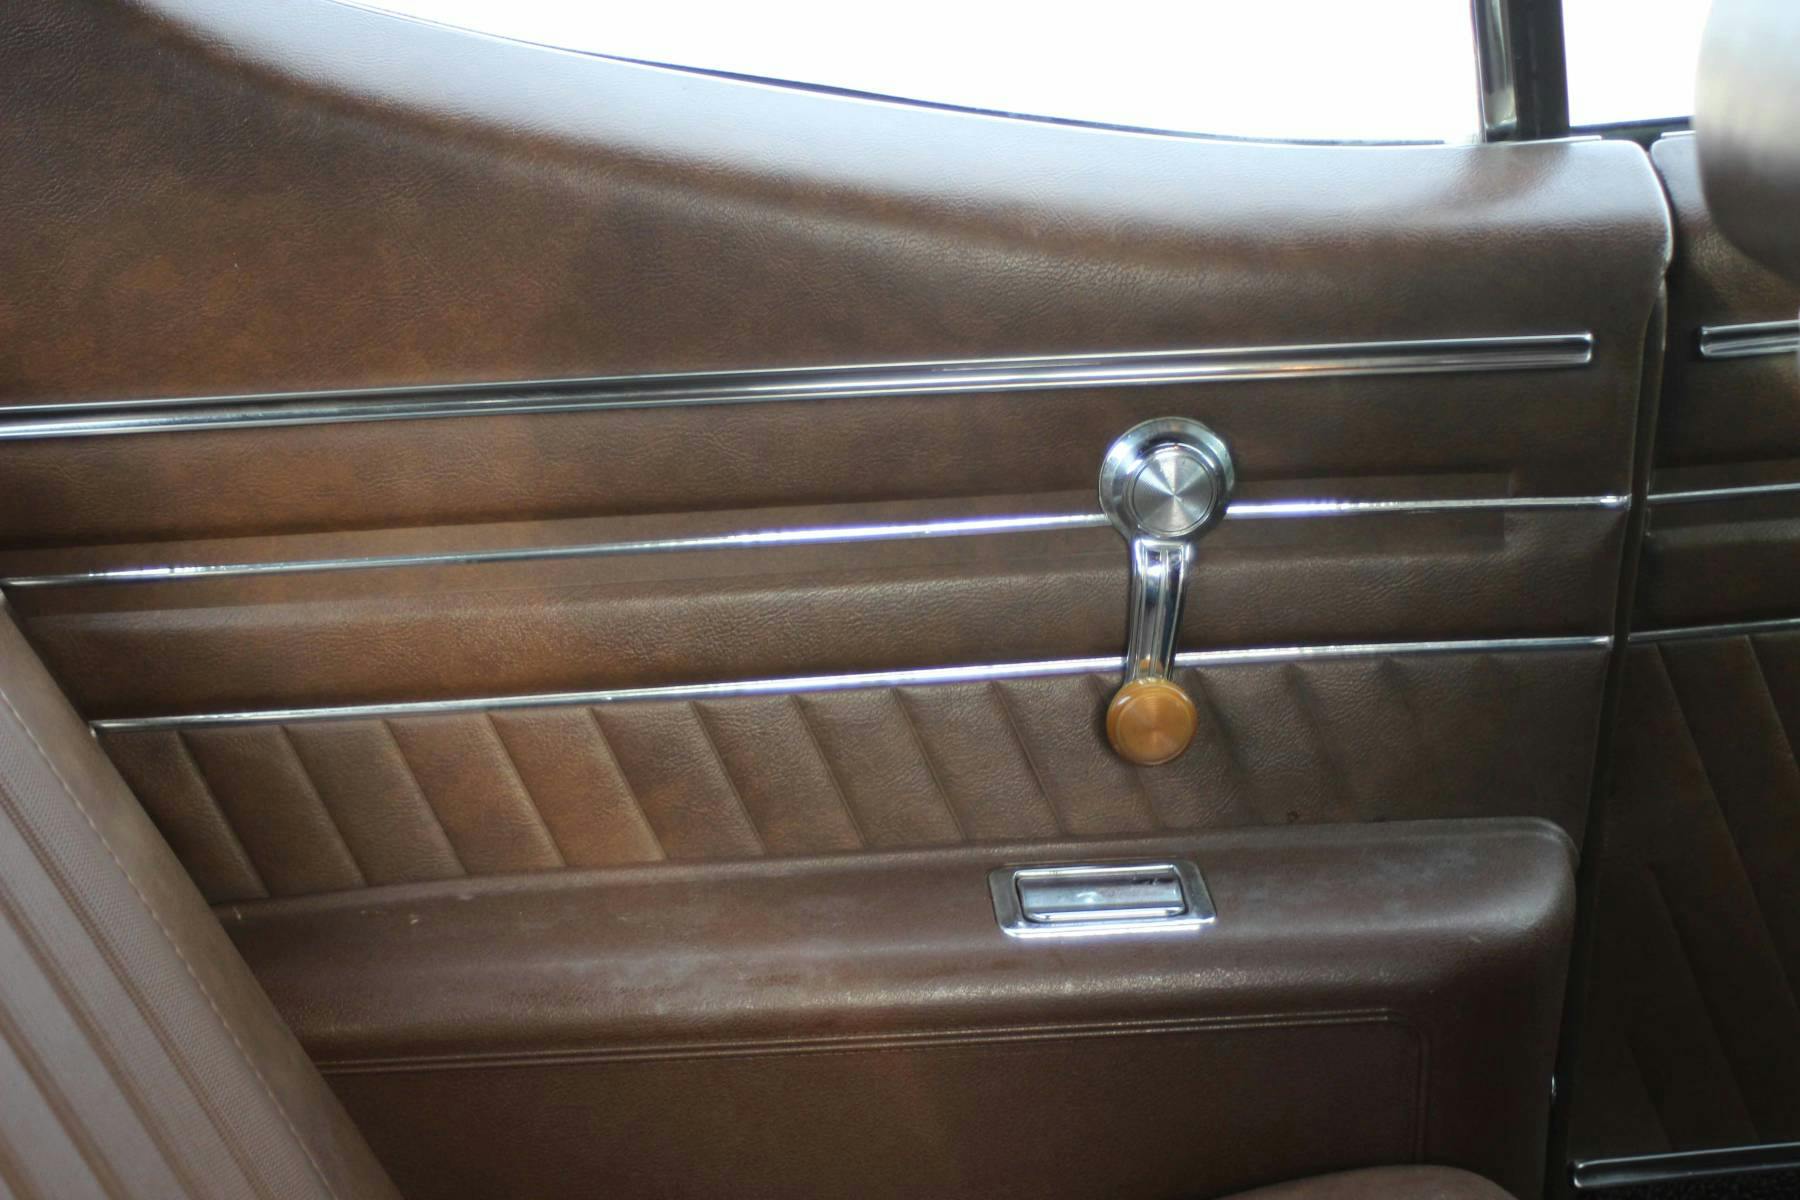 1970 Pontiac GTO Ram Air III interior door handle